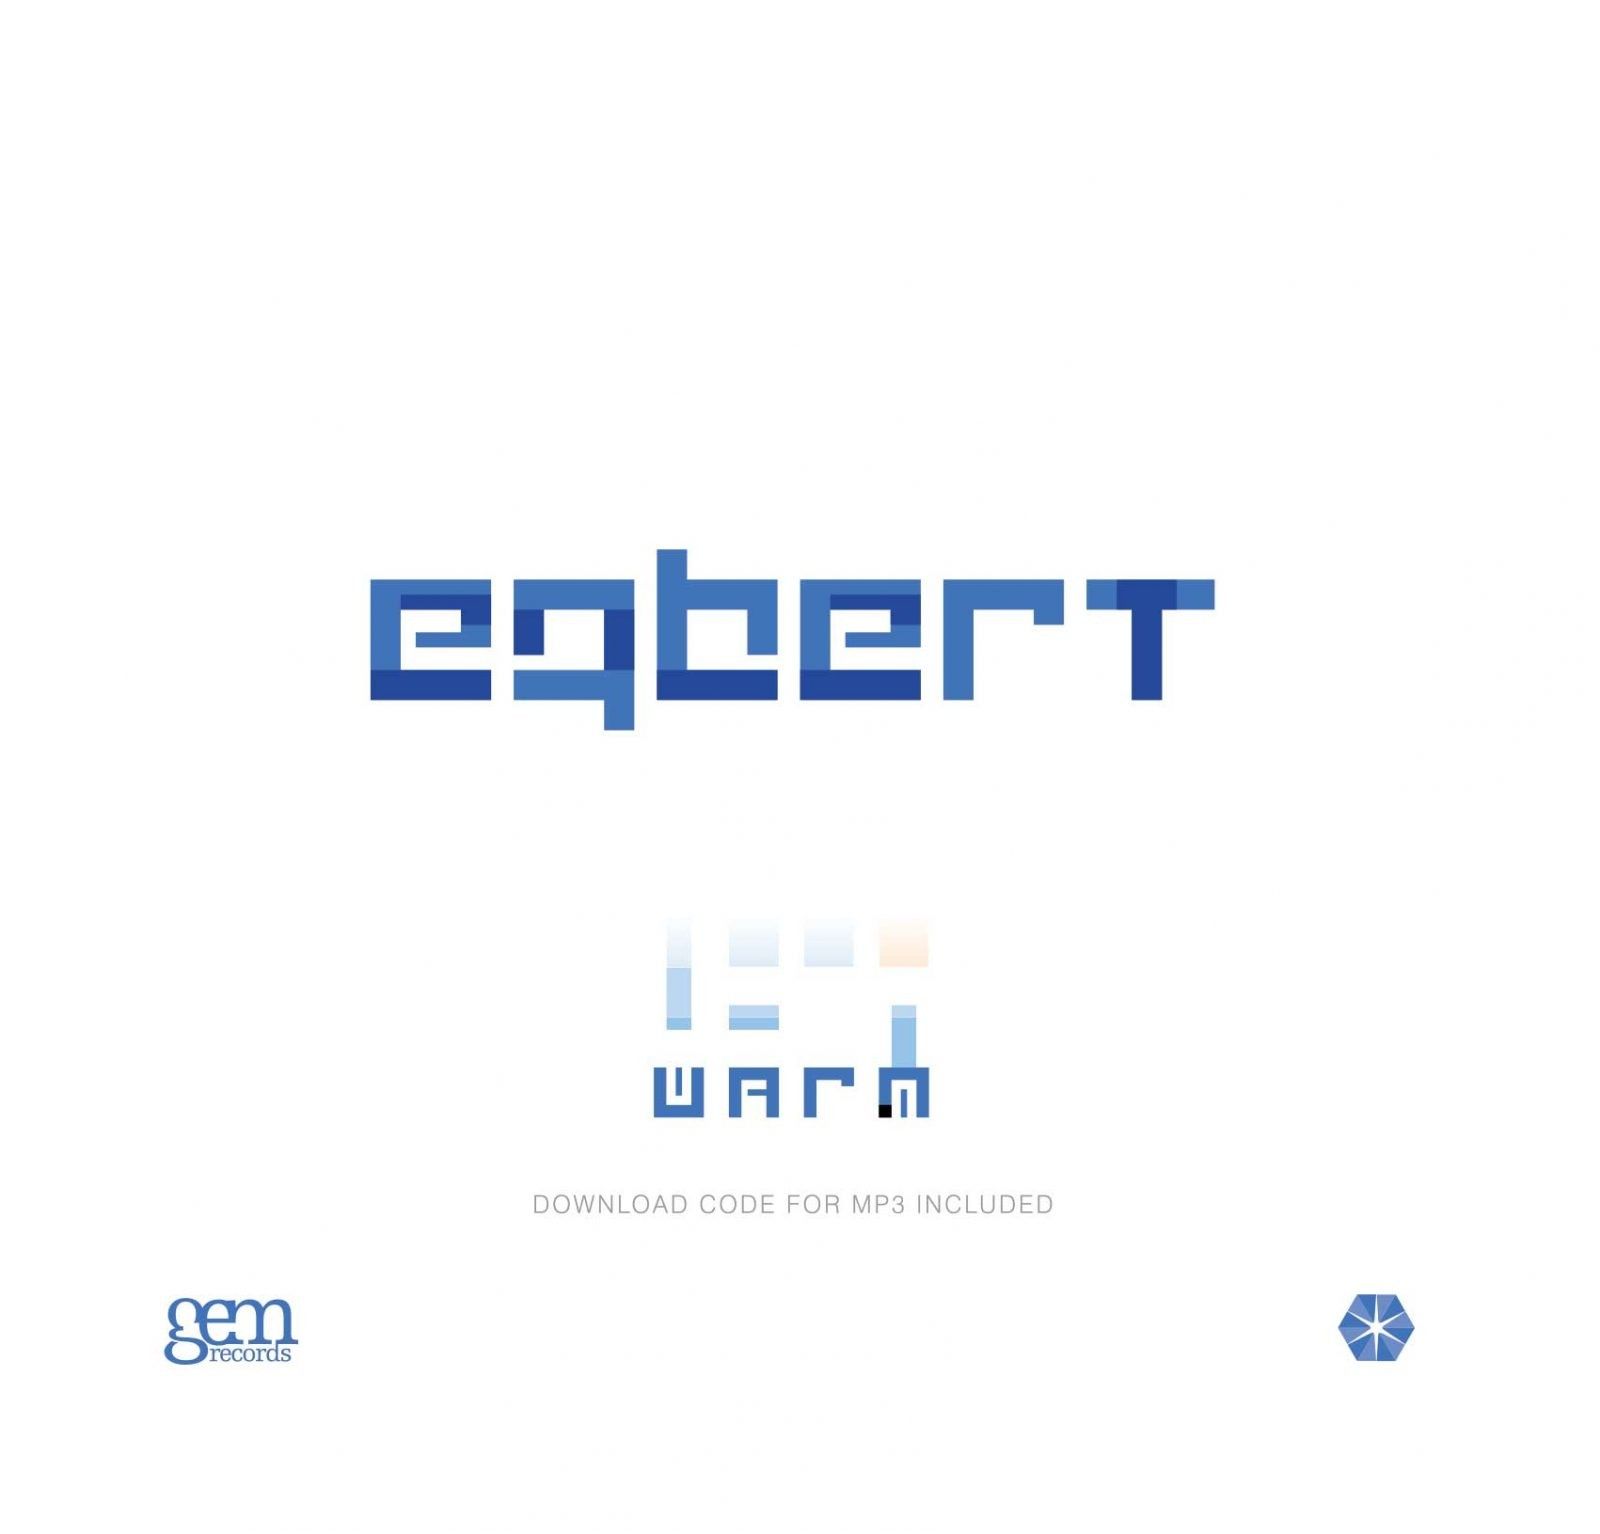 egbert-warm-web-square.jpg.jpeg